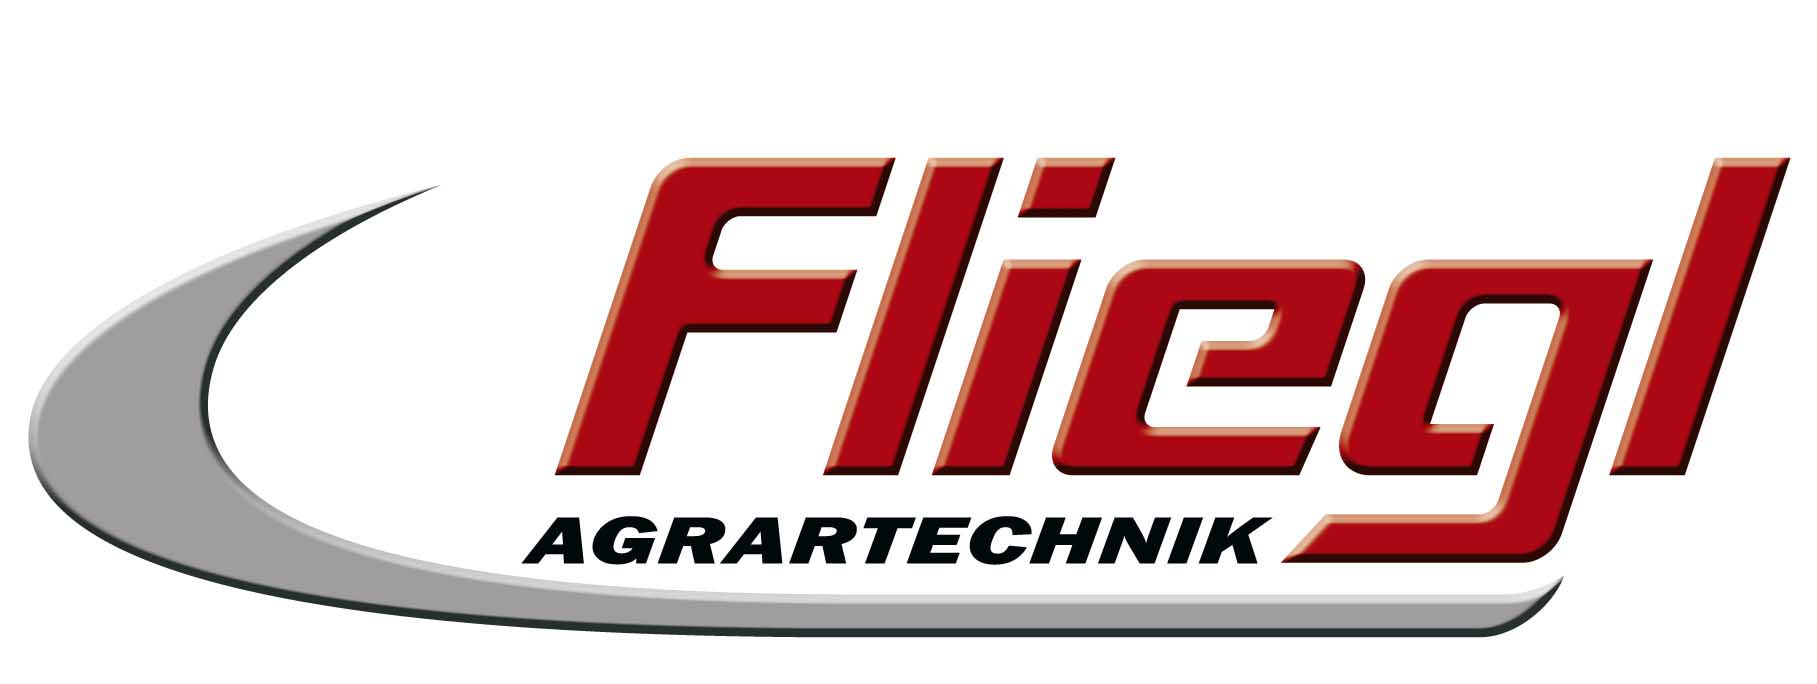 Fliegl Logo photo - 1